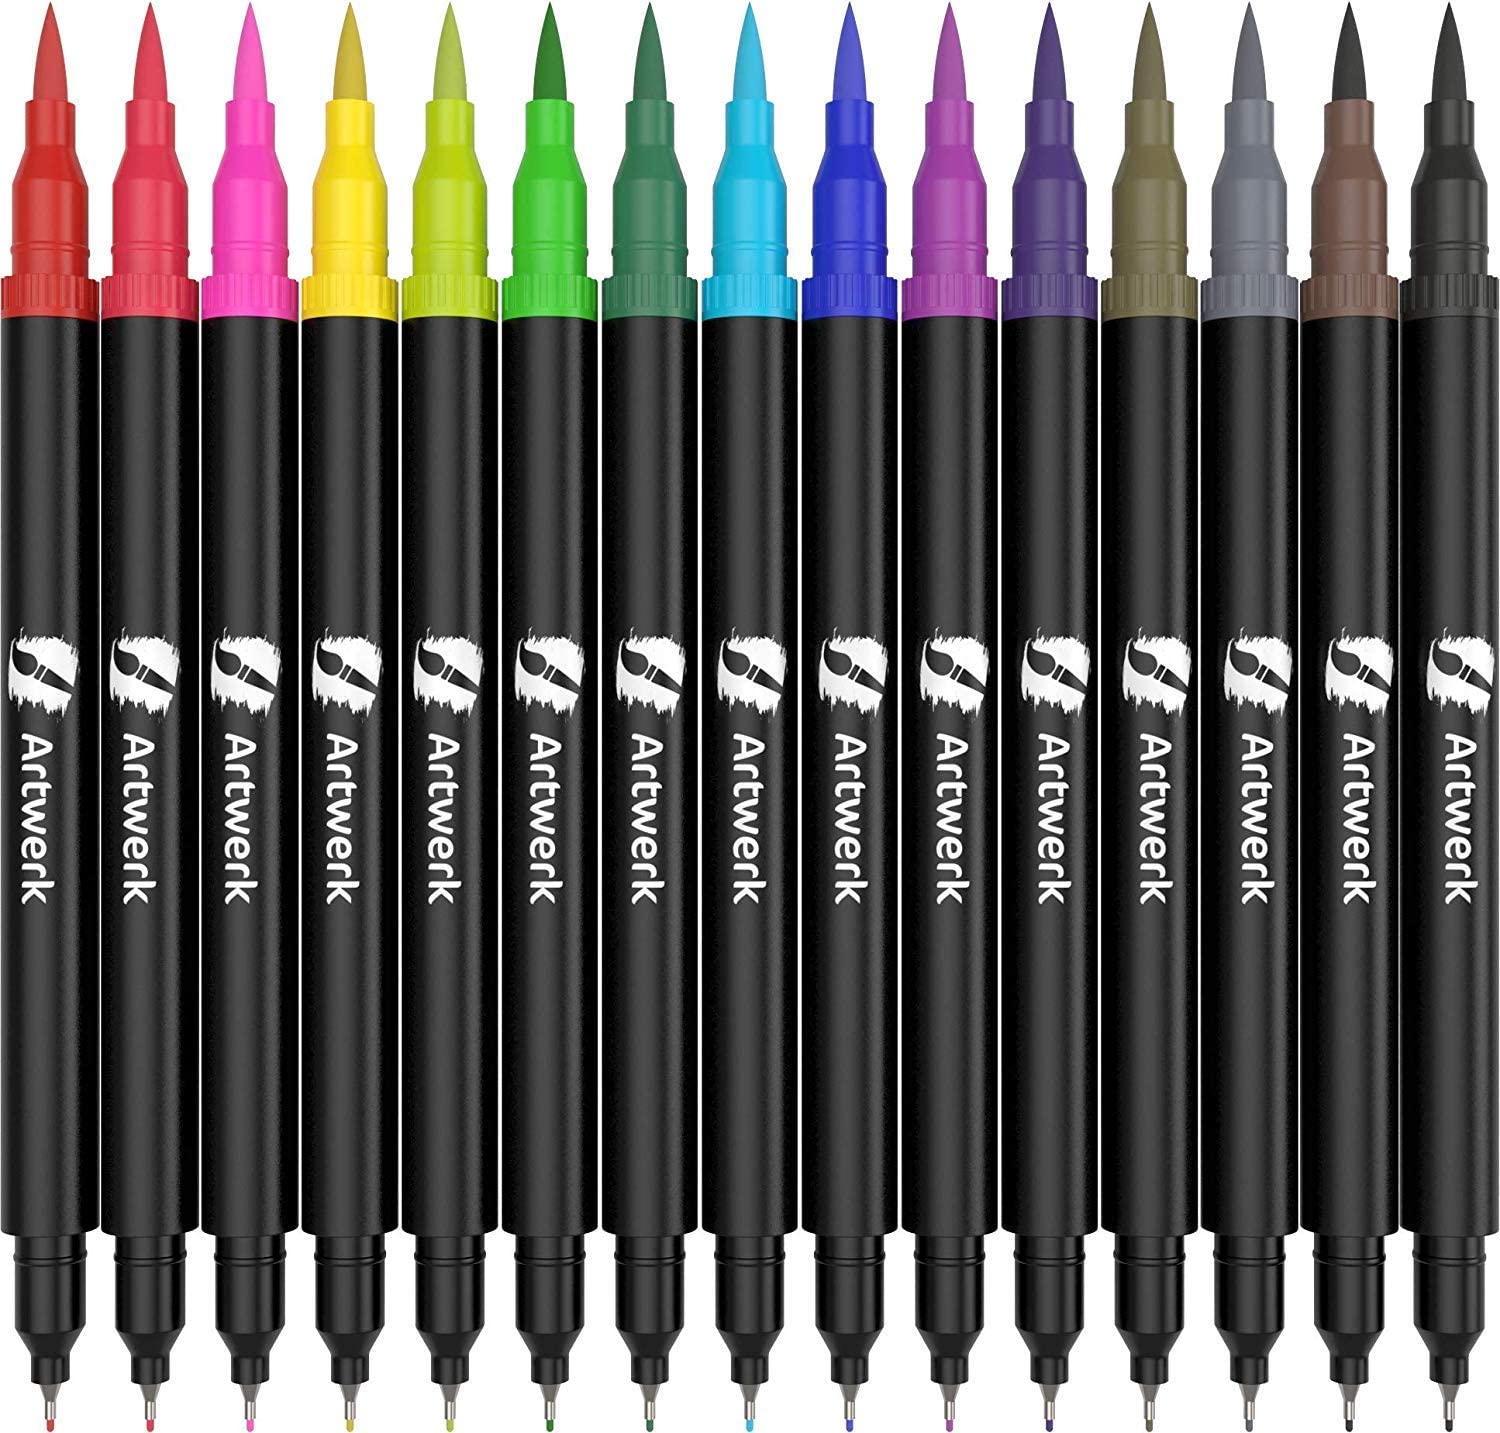 15 Pack ArtWerk Colored Brush Pen [Non-Toxic & Odorless] Markers Set $9.99 (REG $199.99)